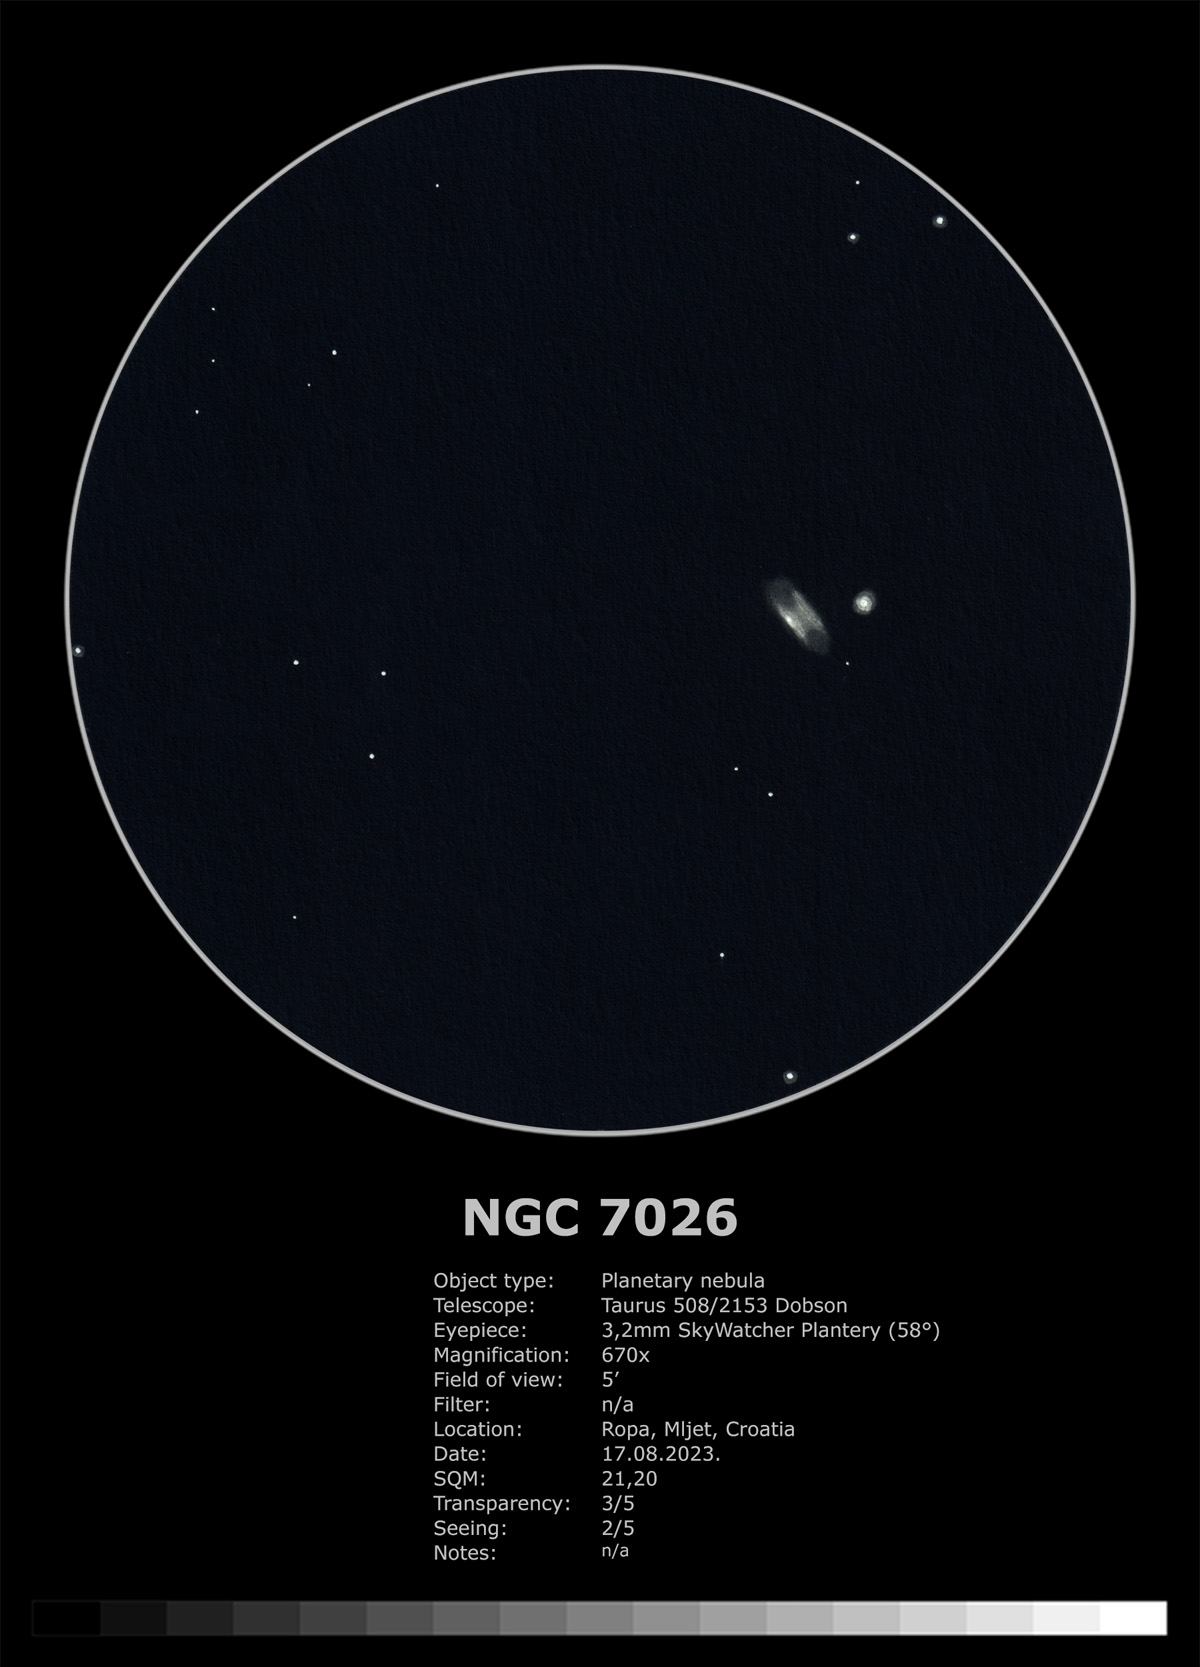 Sketch of plantery nebula NGC 7026